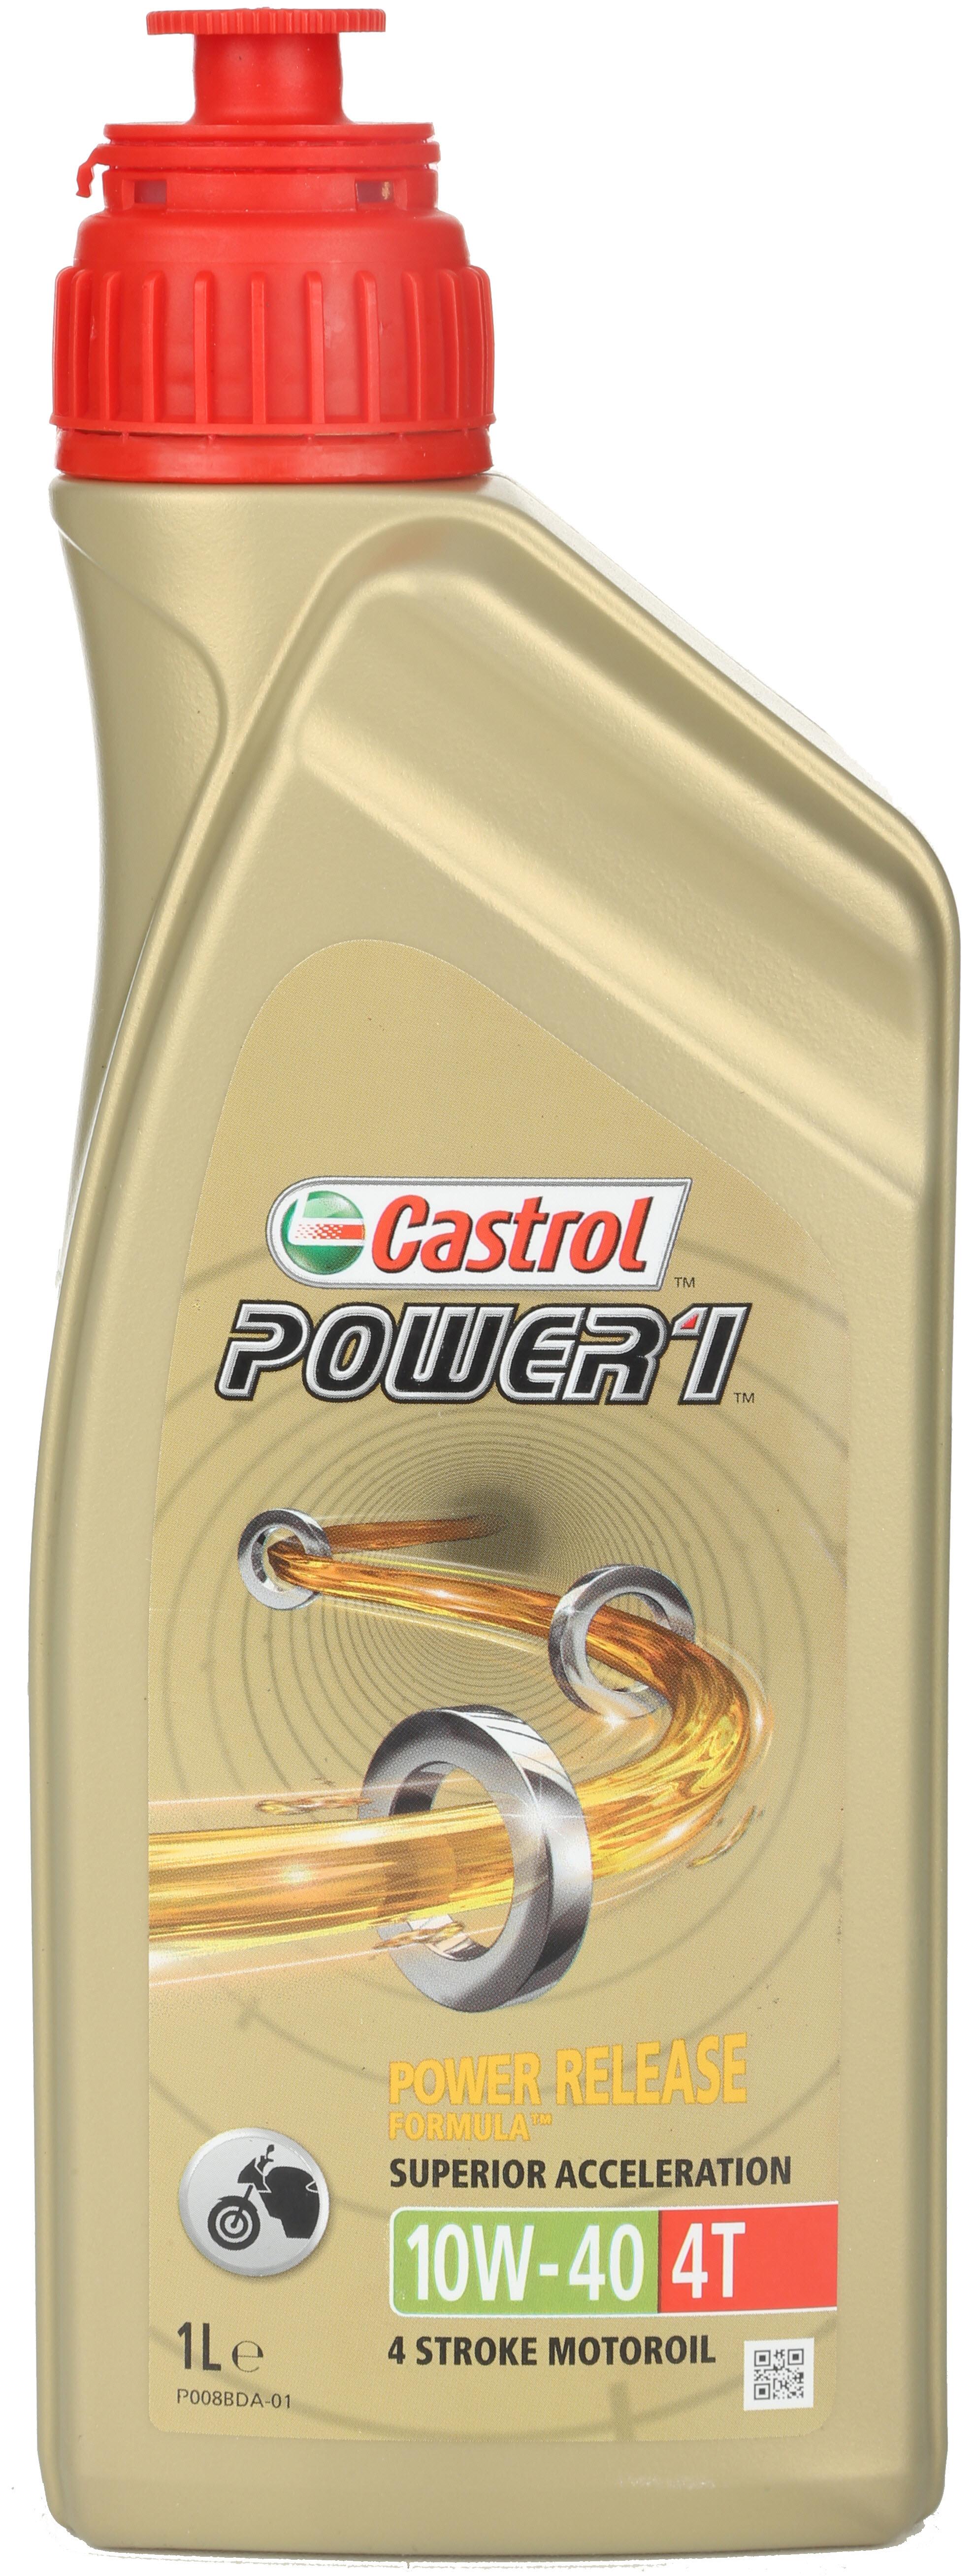 Castrol Power 1 4T 10W/40 Motorcycle Engine Oil - 1Ltr